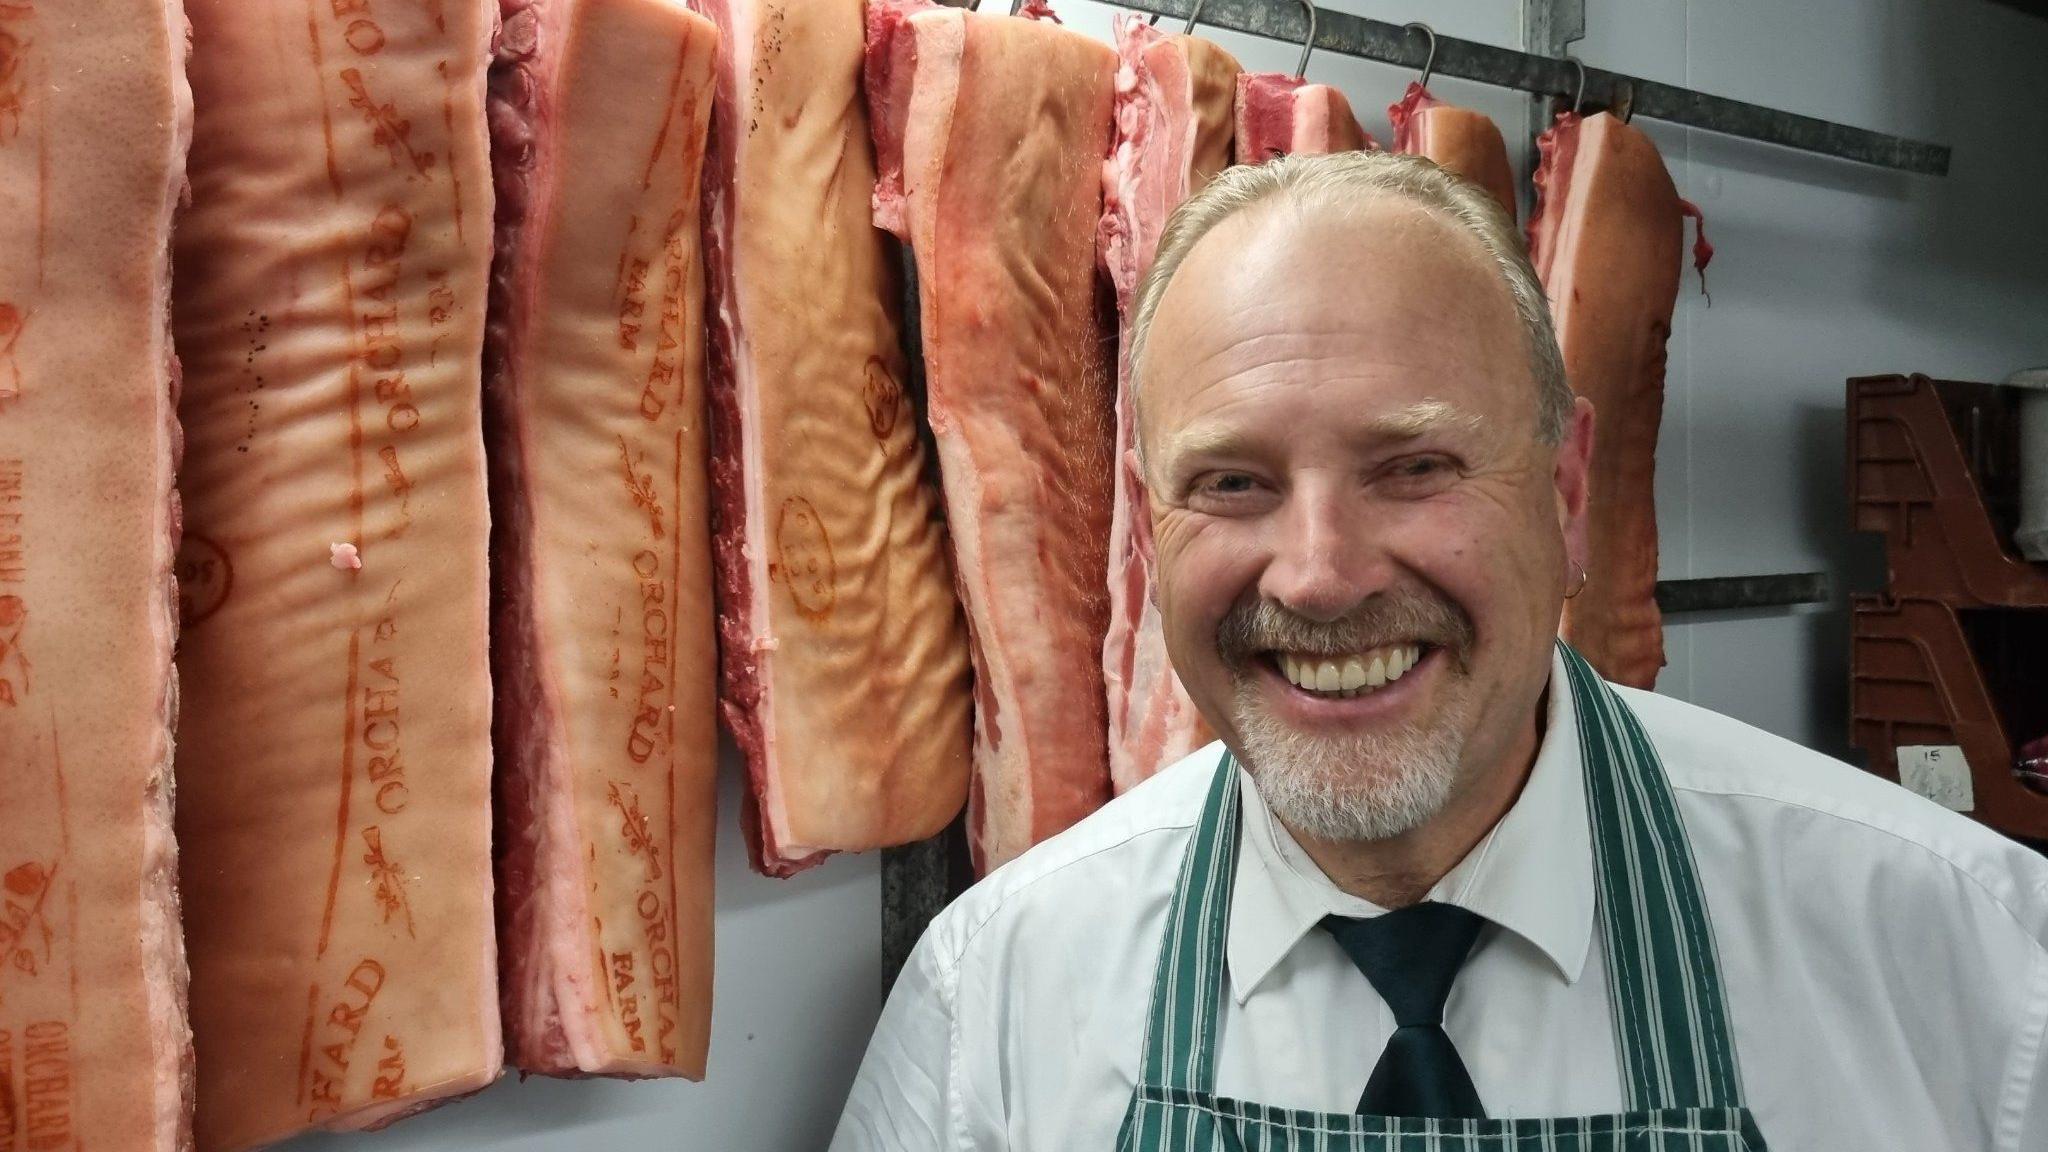 long-serving butcher hangs up his apron